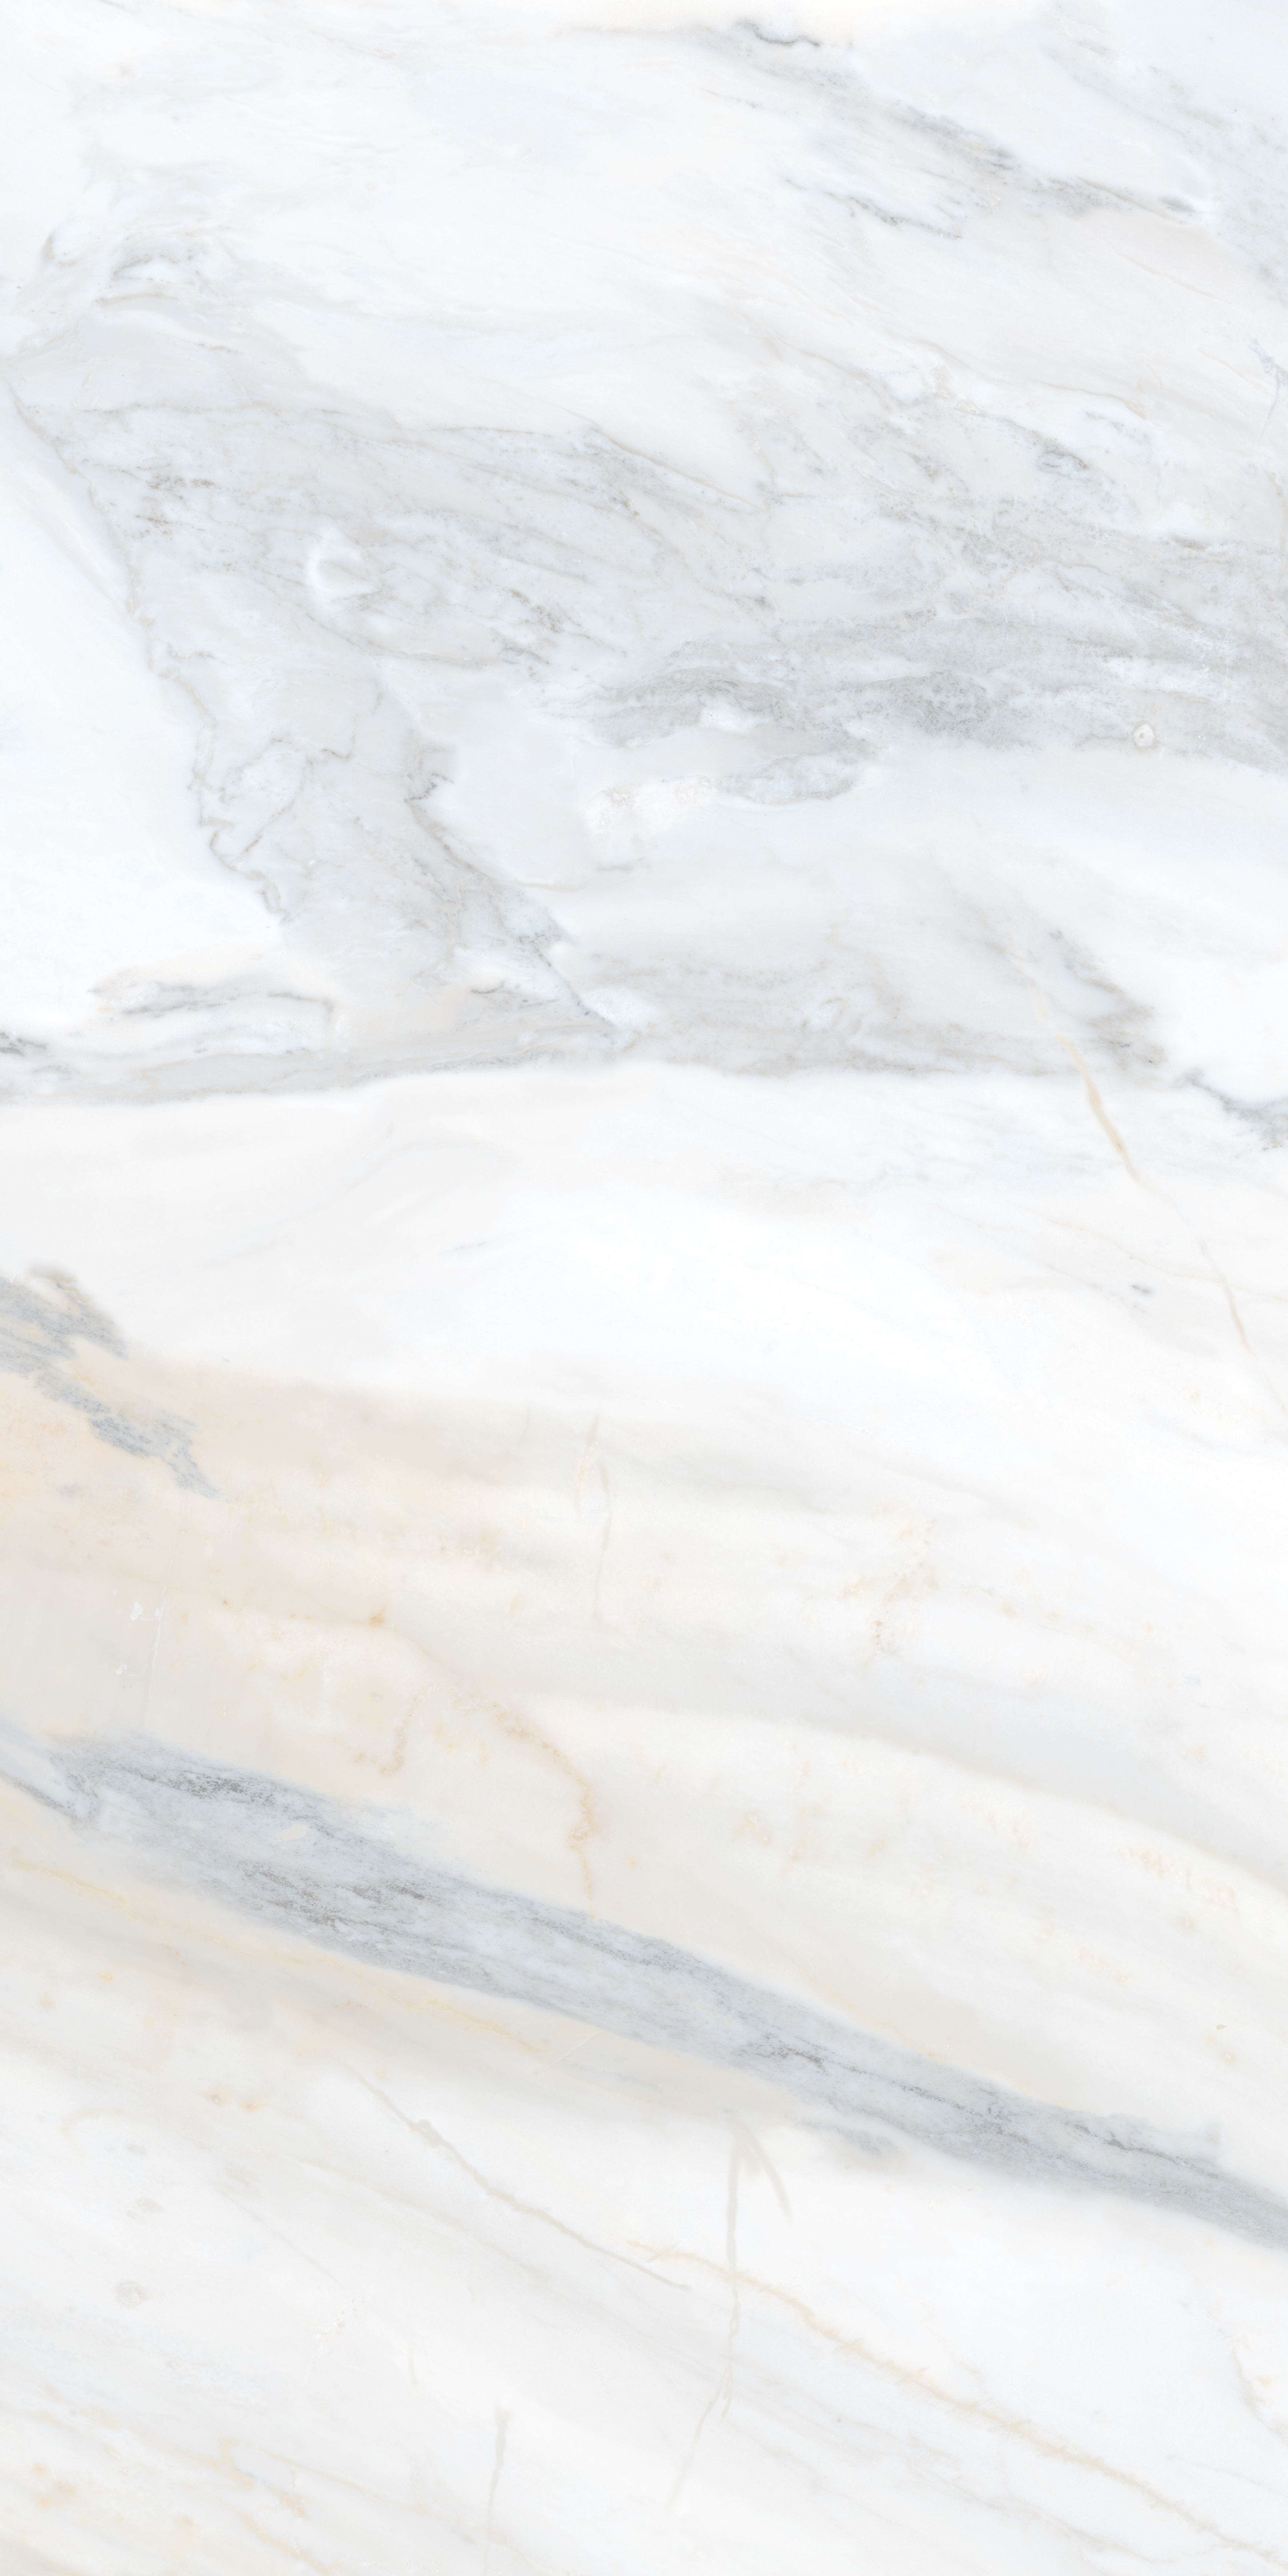 Image of Wickes Capri Warm Satin Marble Ceramic Wall & Floor Tile - 600 x 300mm - Sample